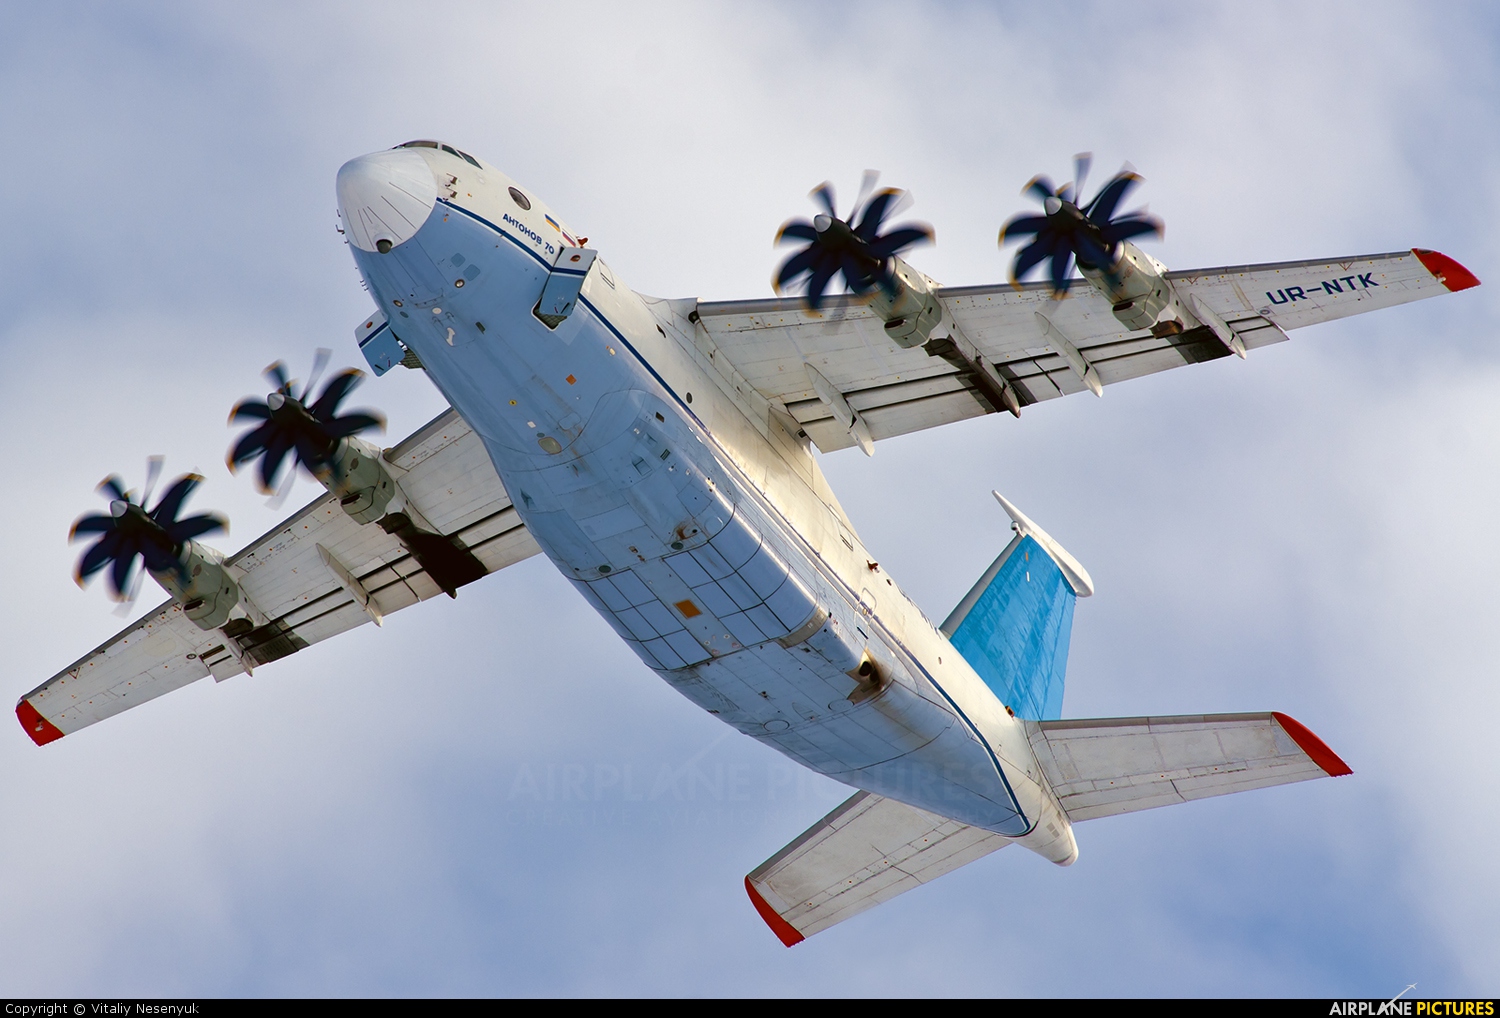 Antonov An-70 Wallpapers